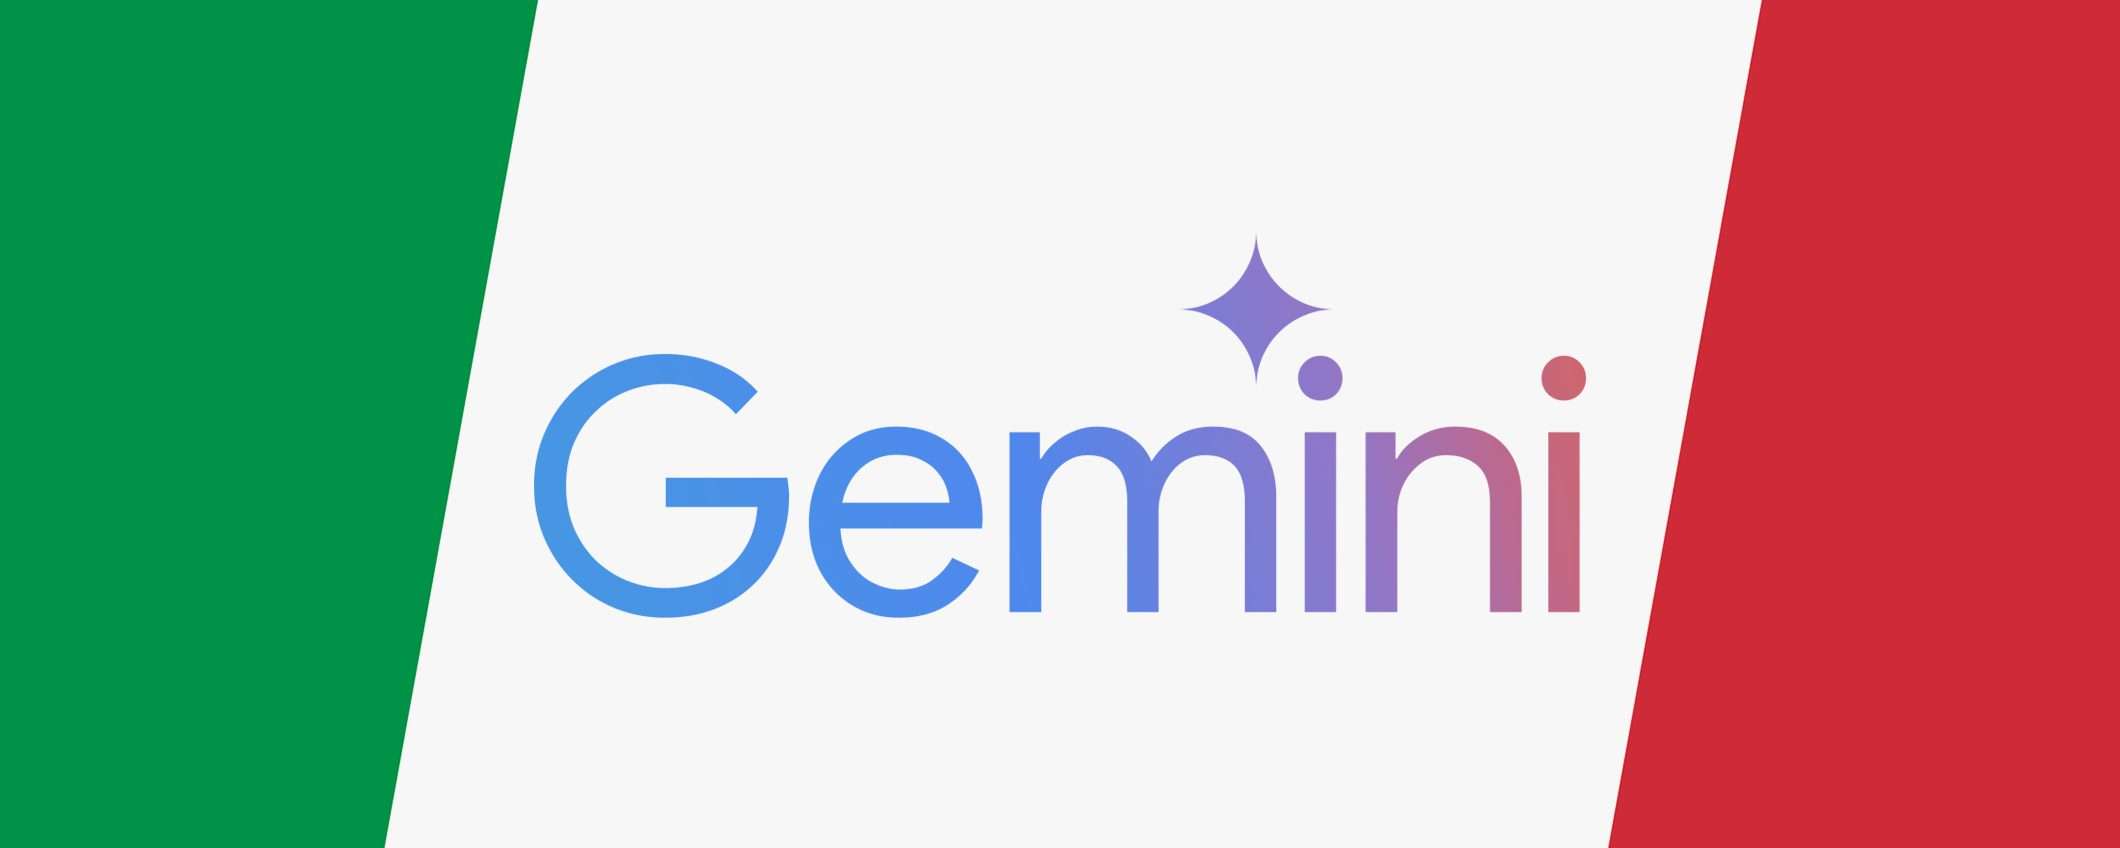 Gemini: l'app arriva in Italia, in download per Android